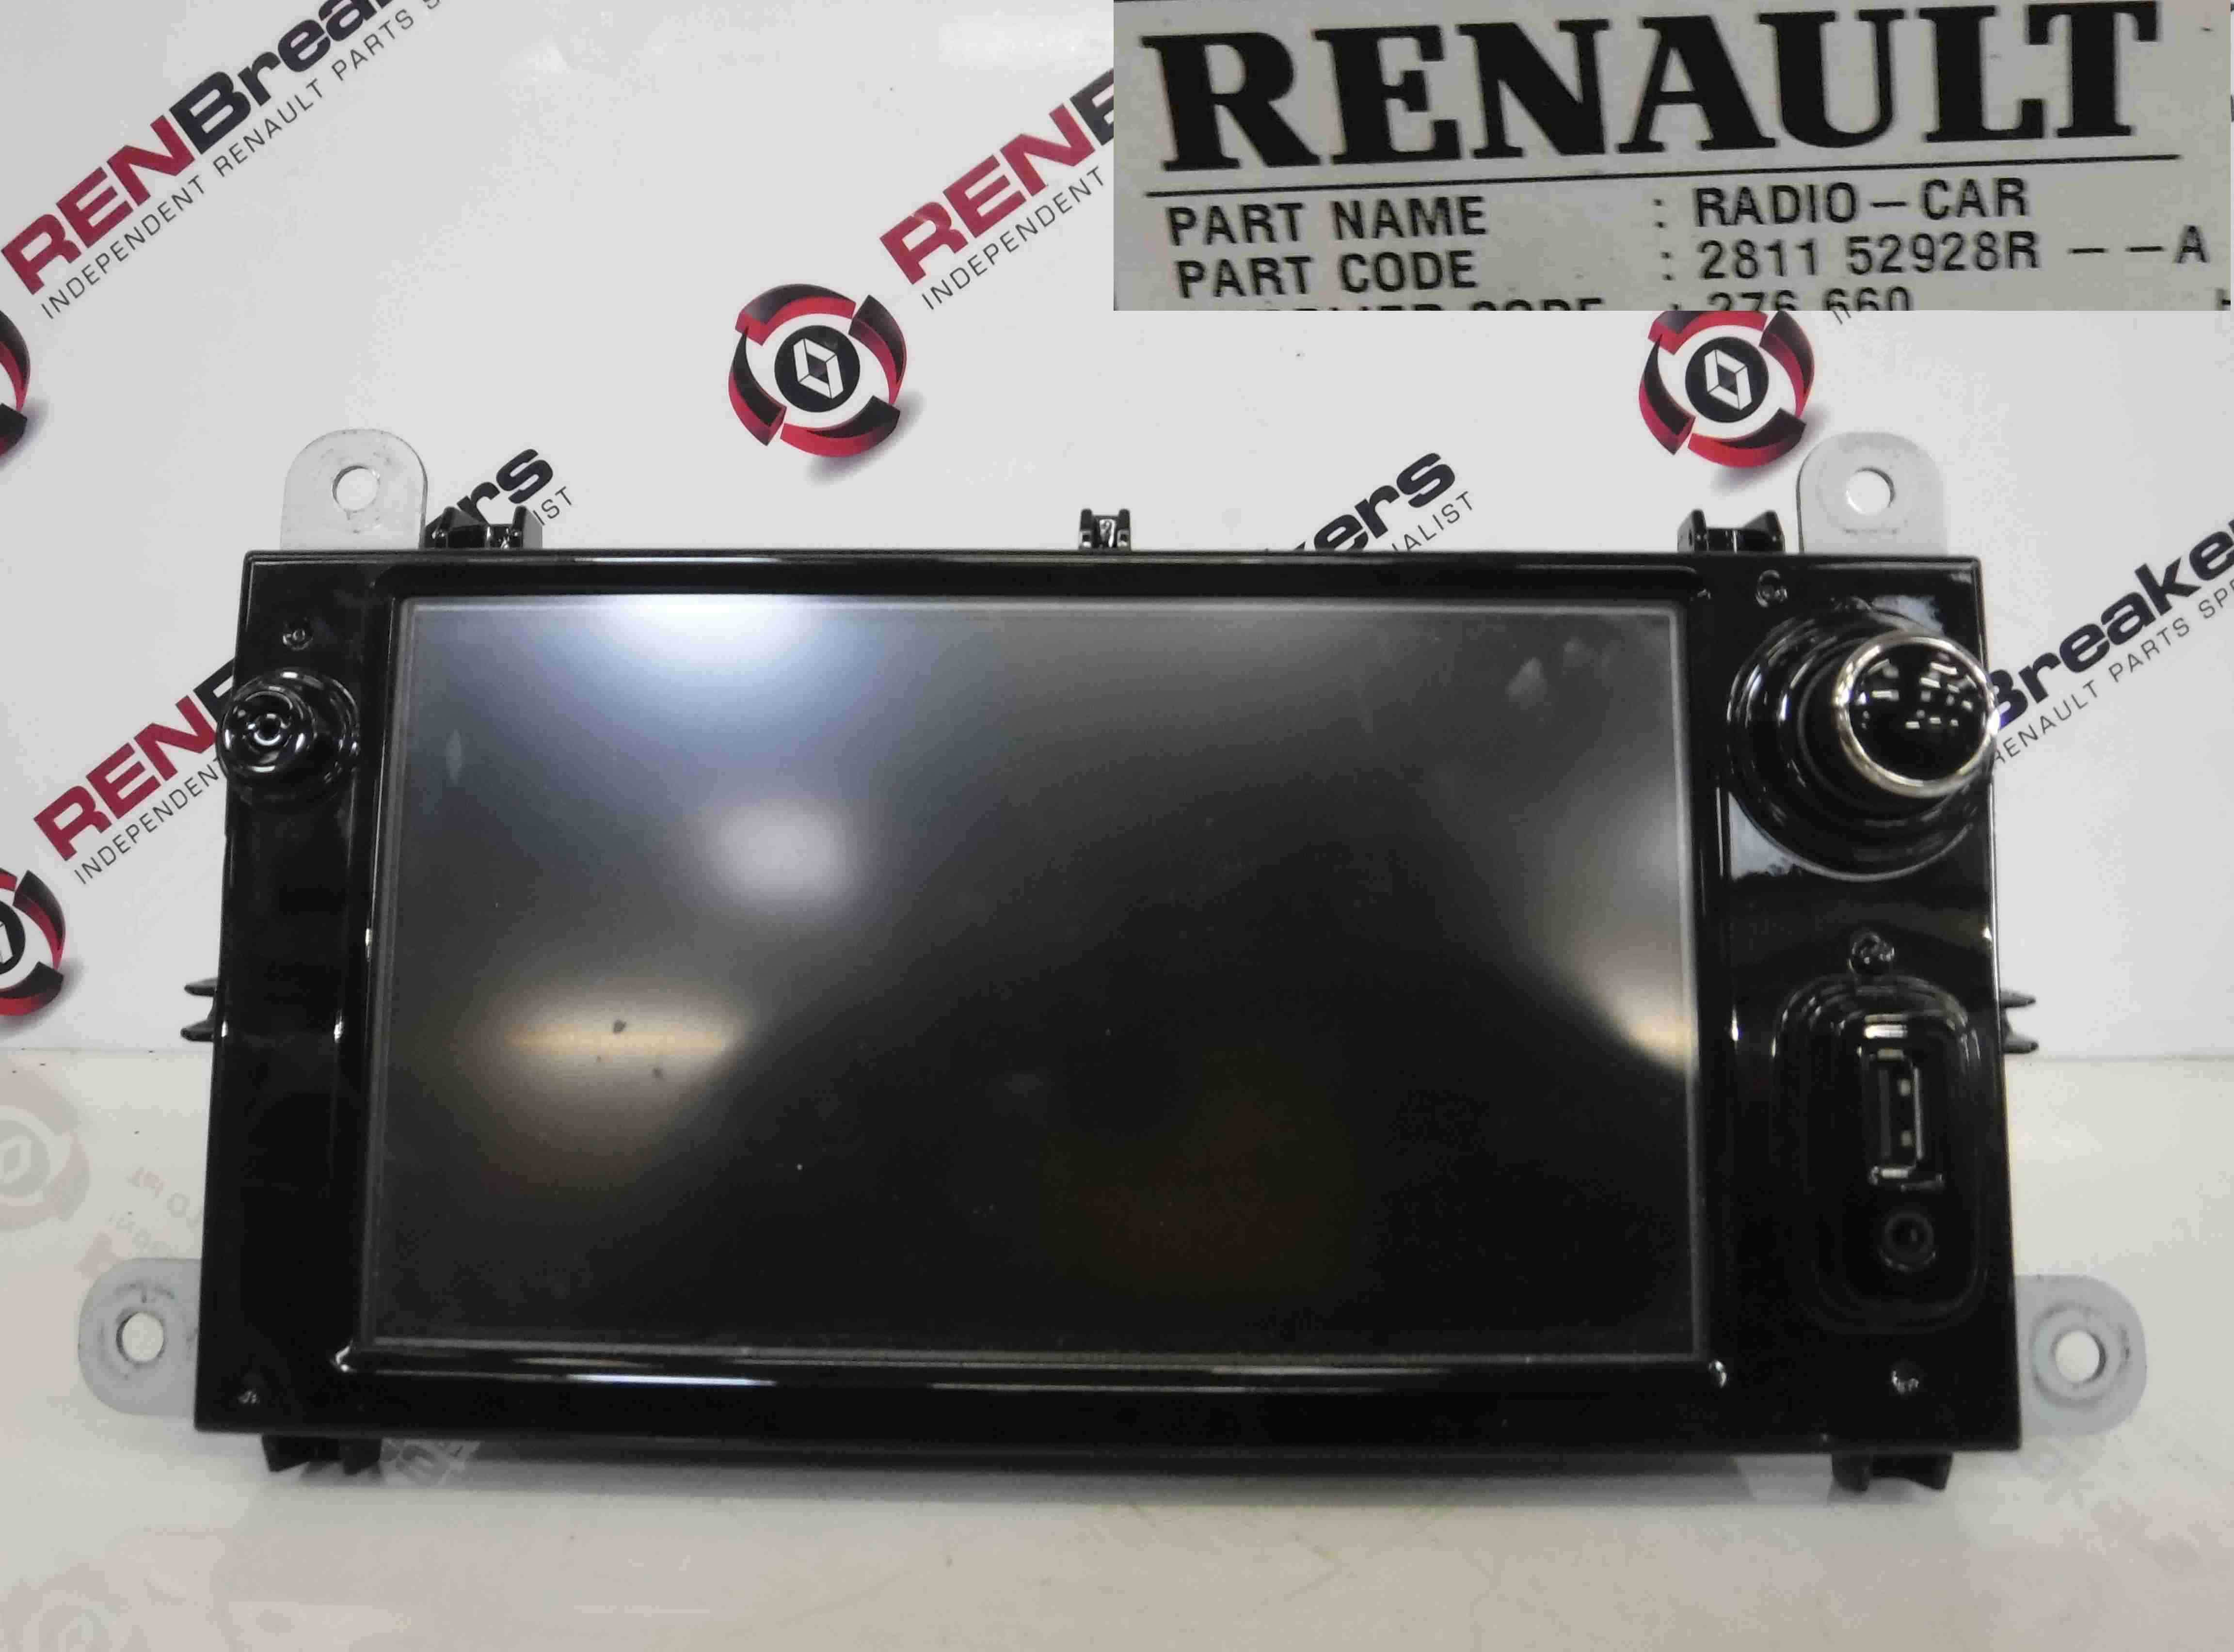 Renault Clio MK4 2013-2015 Sat Nav Radio Stereo AUX USB Screen Navigation